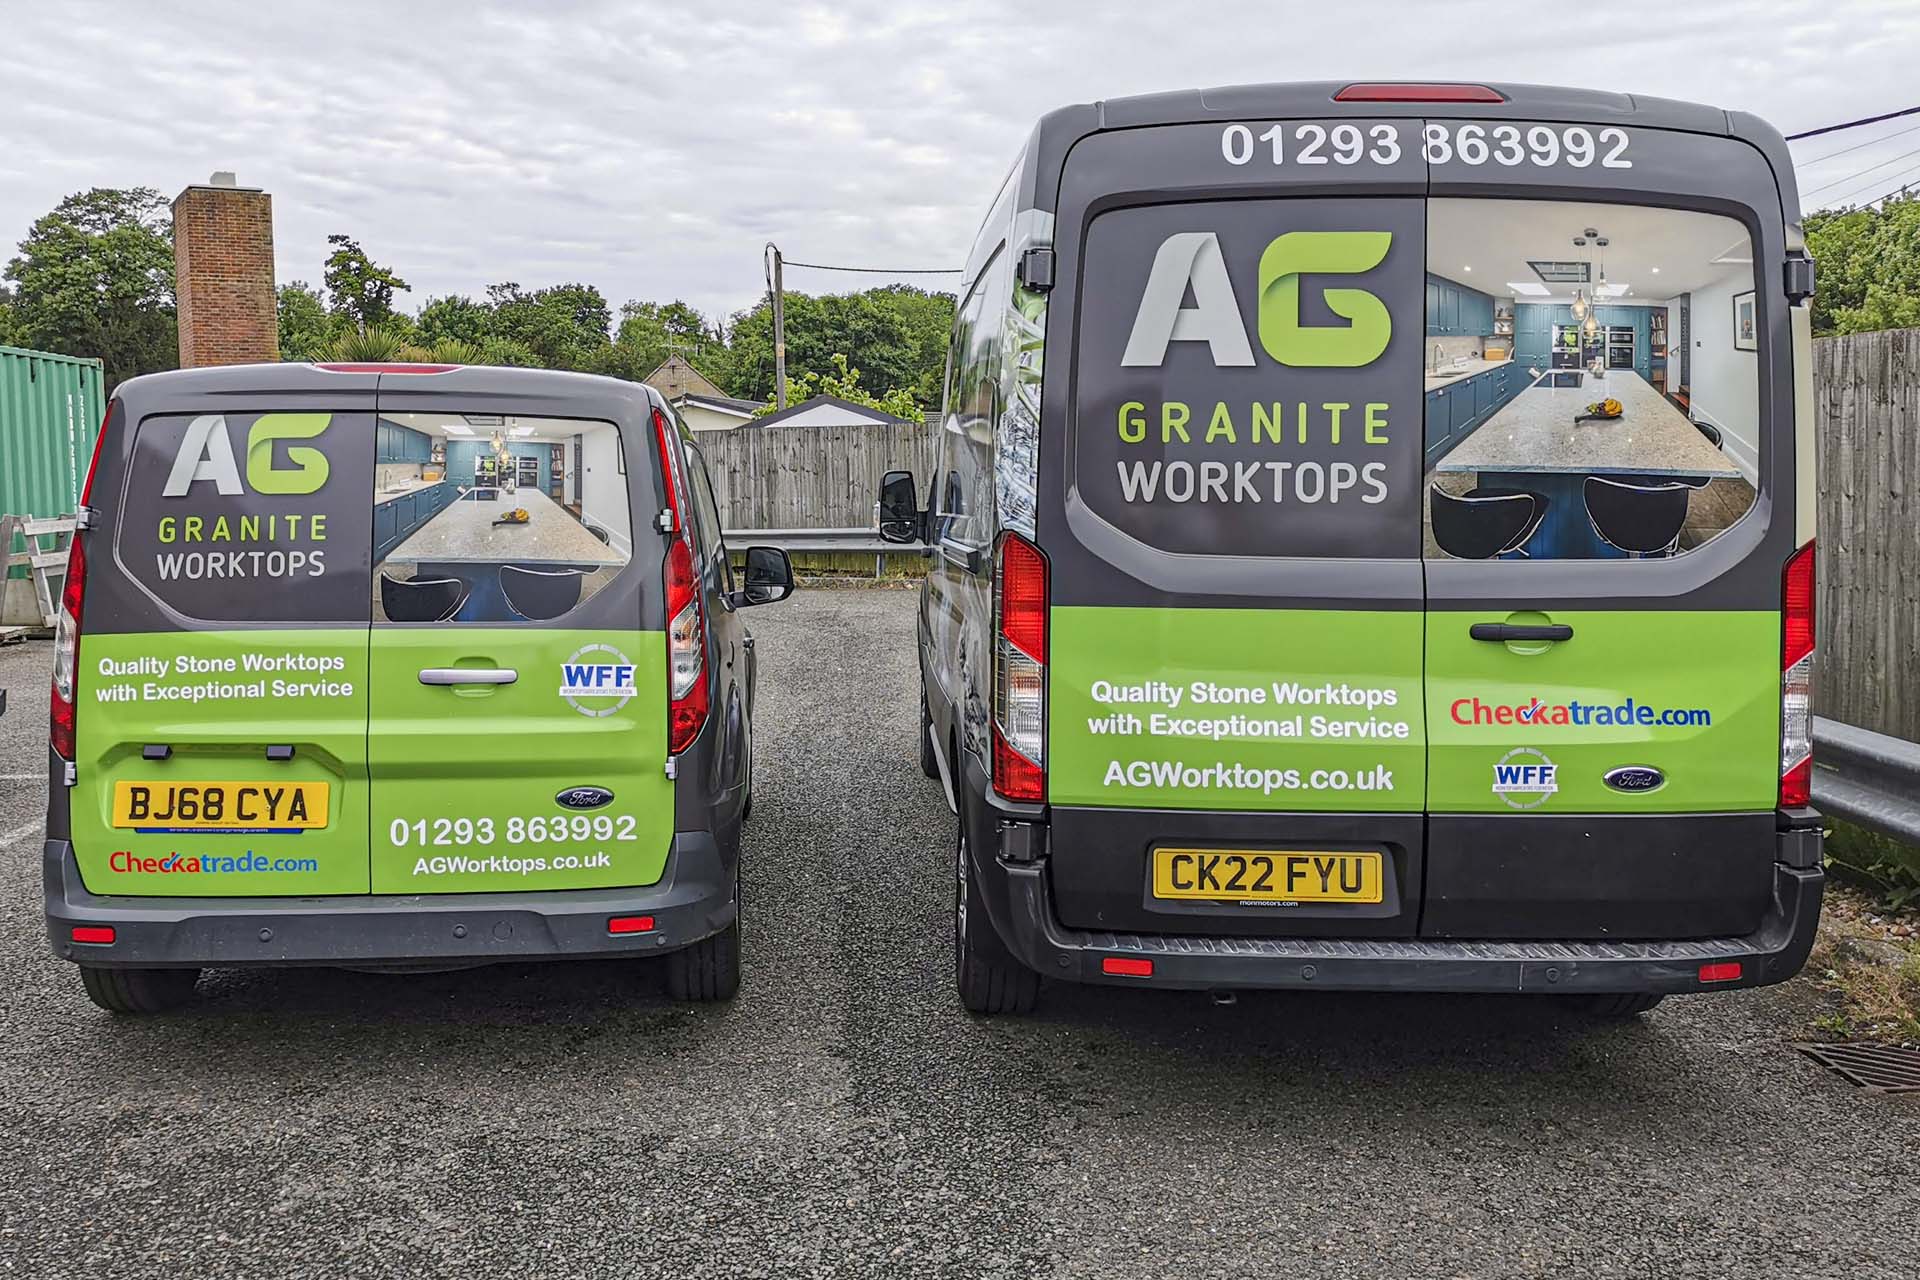 AG worktops vans Affordable Granite Charlwood Surrey Redhill Horley Crawley11 a